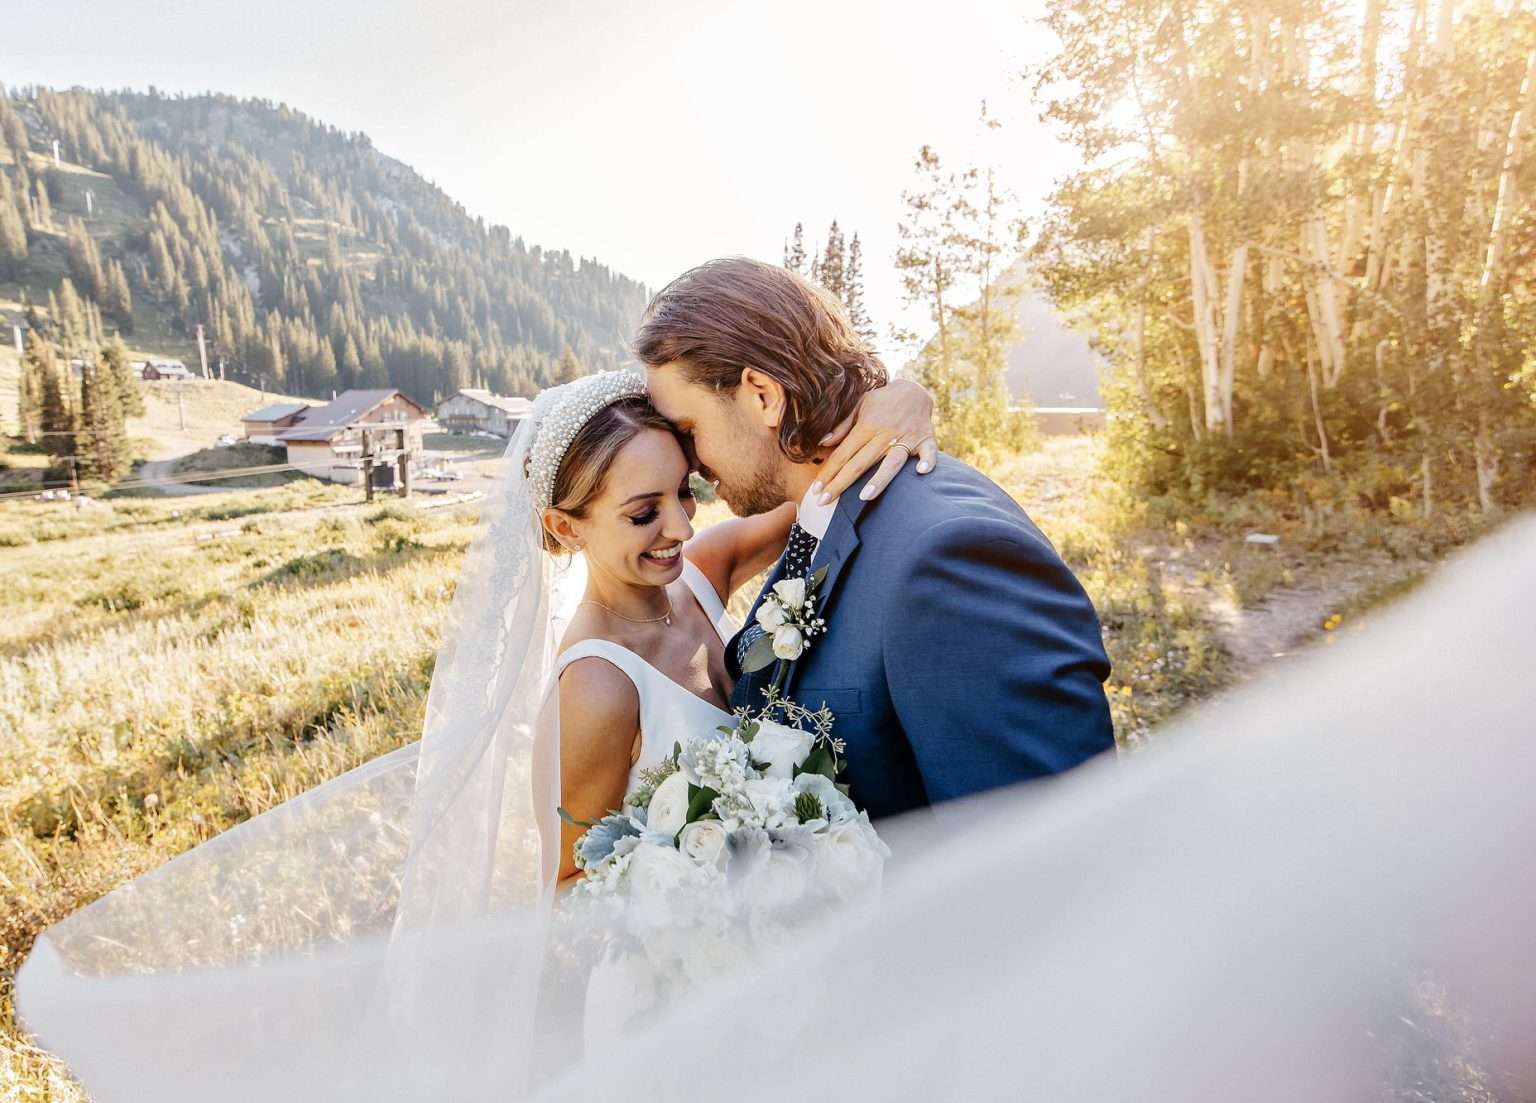 Park city wedding - shoot by Utah wedding photographer